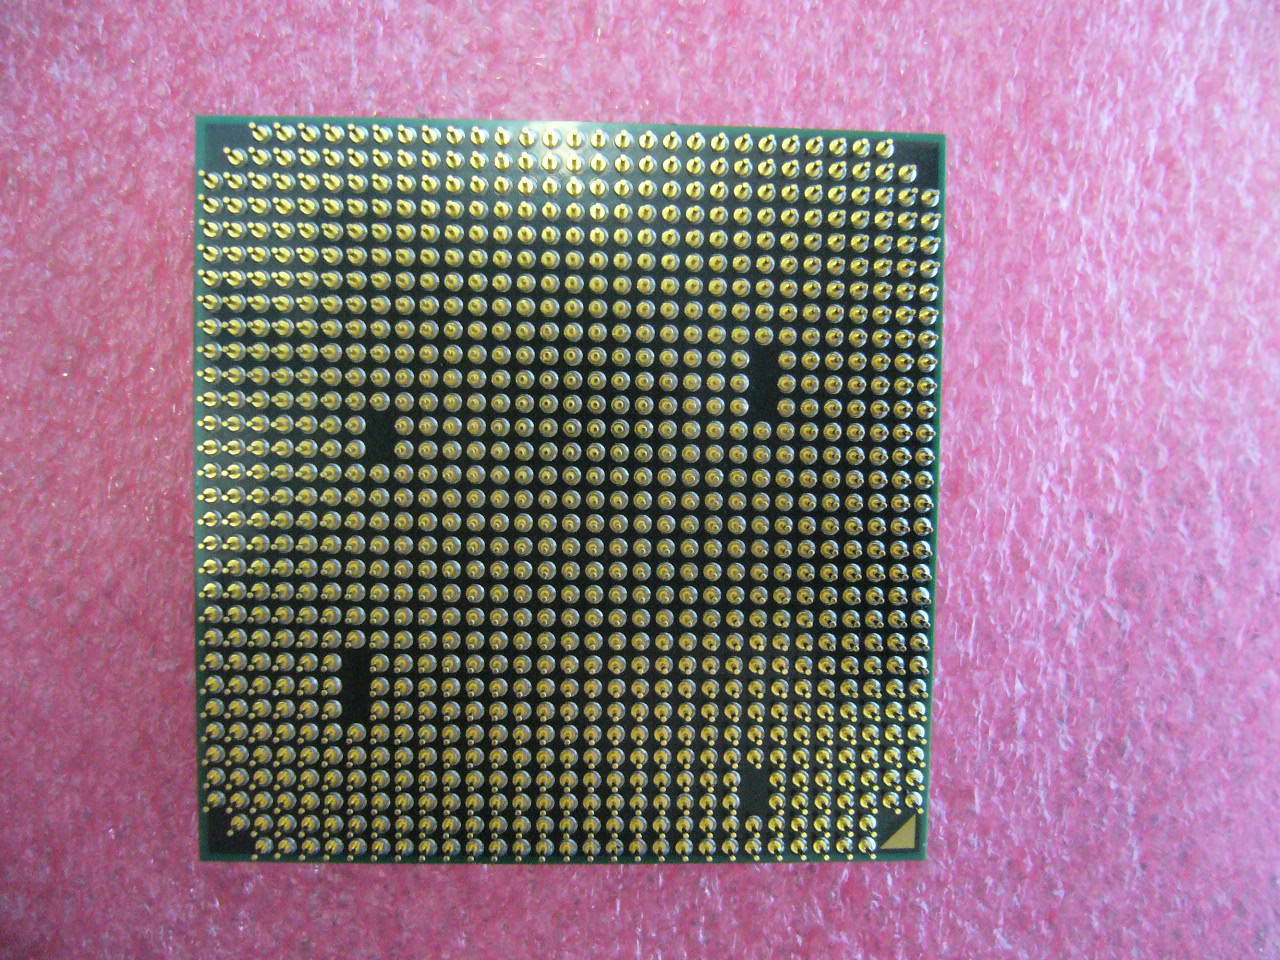 Athlon x2 сокет. Athlon II 425 x3 am3. Athlon x2 250 сокет. AMD Athlon II Socket am3. AMD Athlon II x2 250 am3, 2 x 3000 МГЦ.